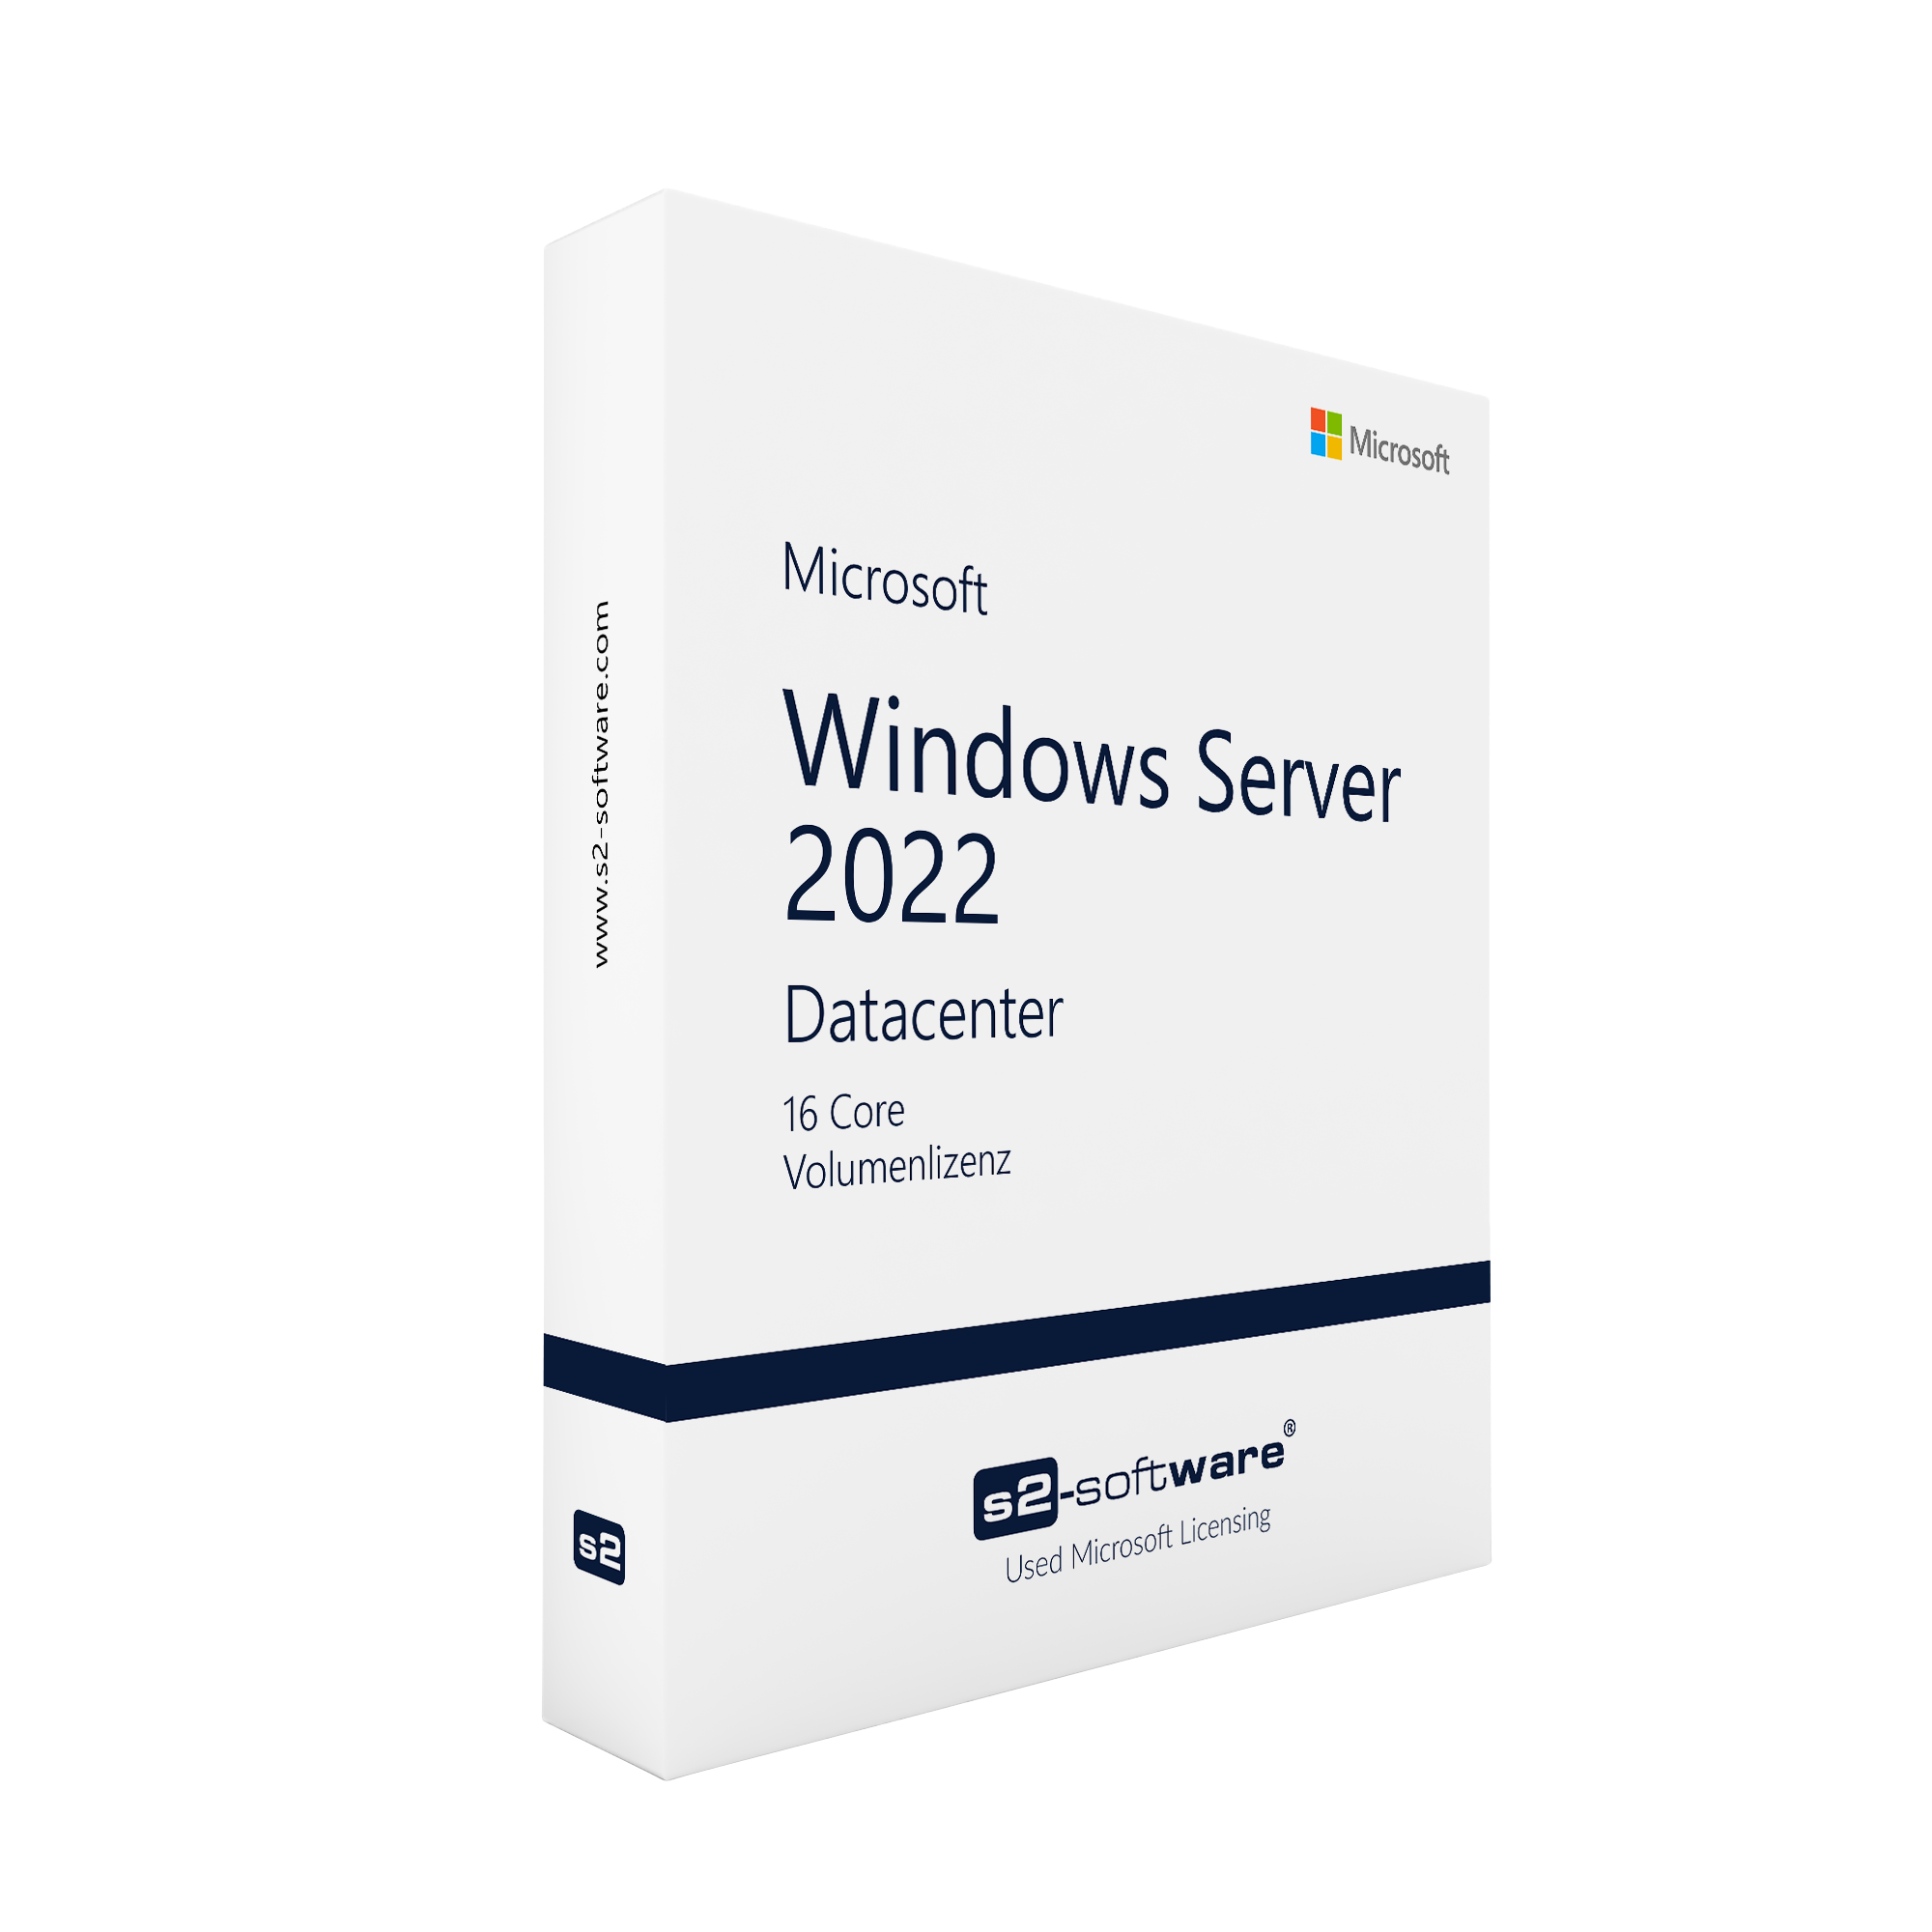 Windows Server 2022 Datacenter 16 Core